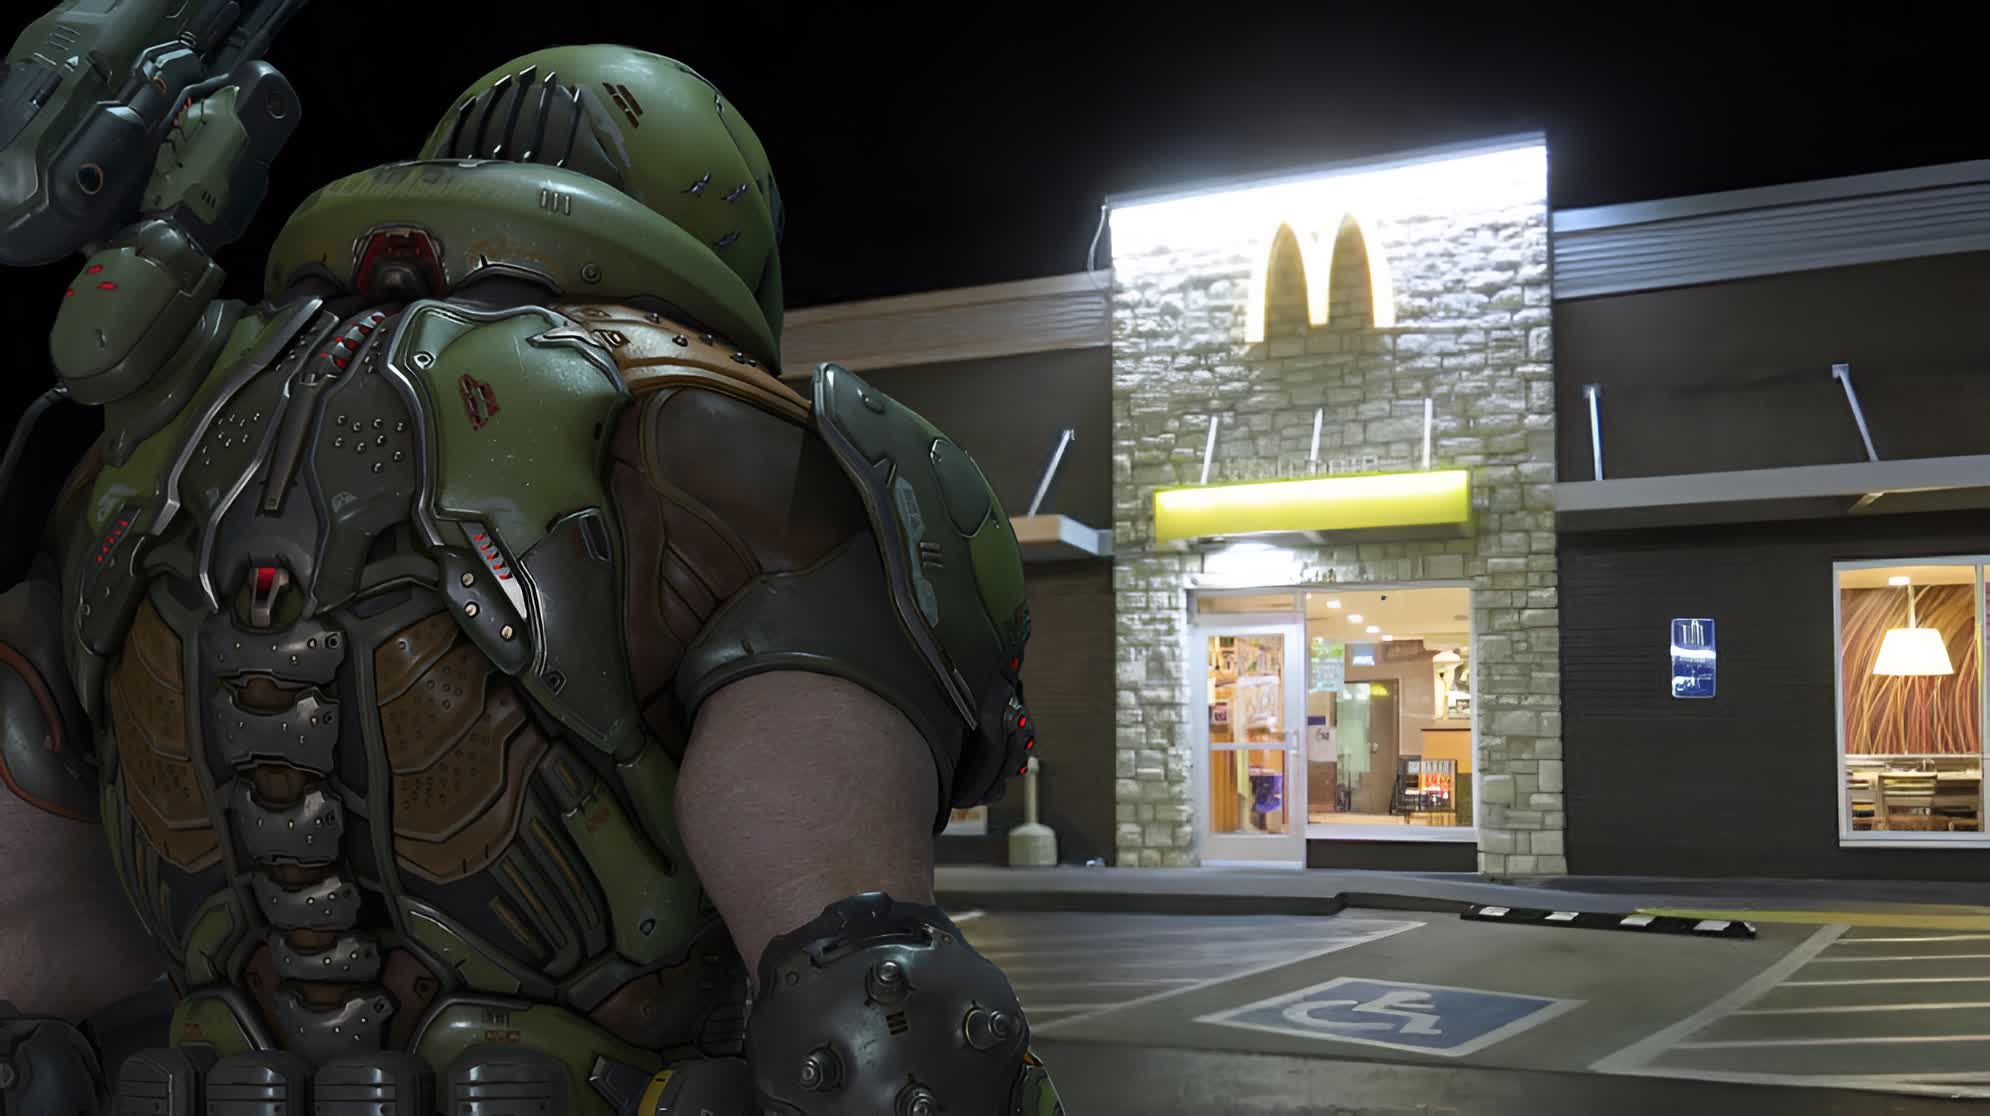 Someone loaded Doom onto a McDonald's self-order kiosk